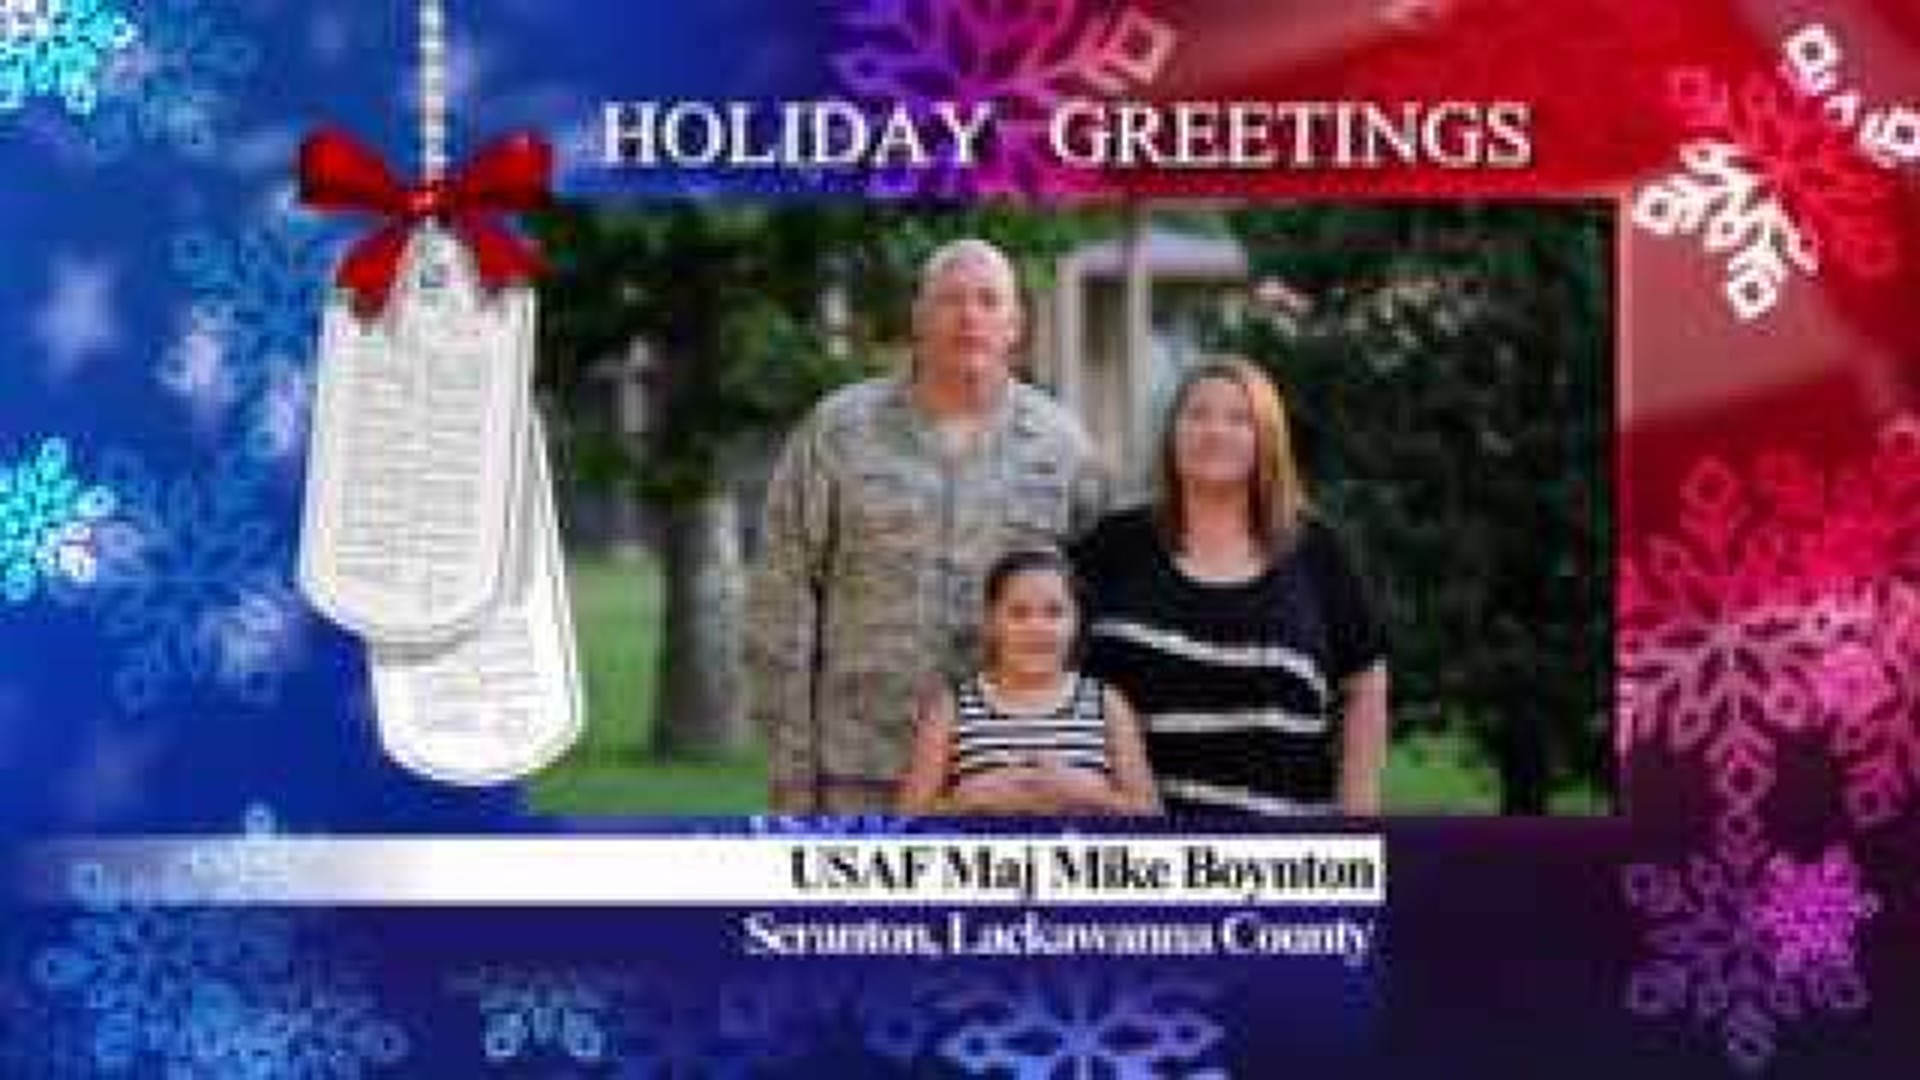 USAF Maj Mike Boynton